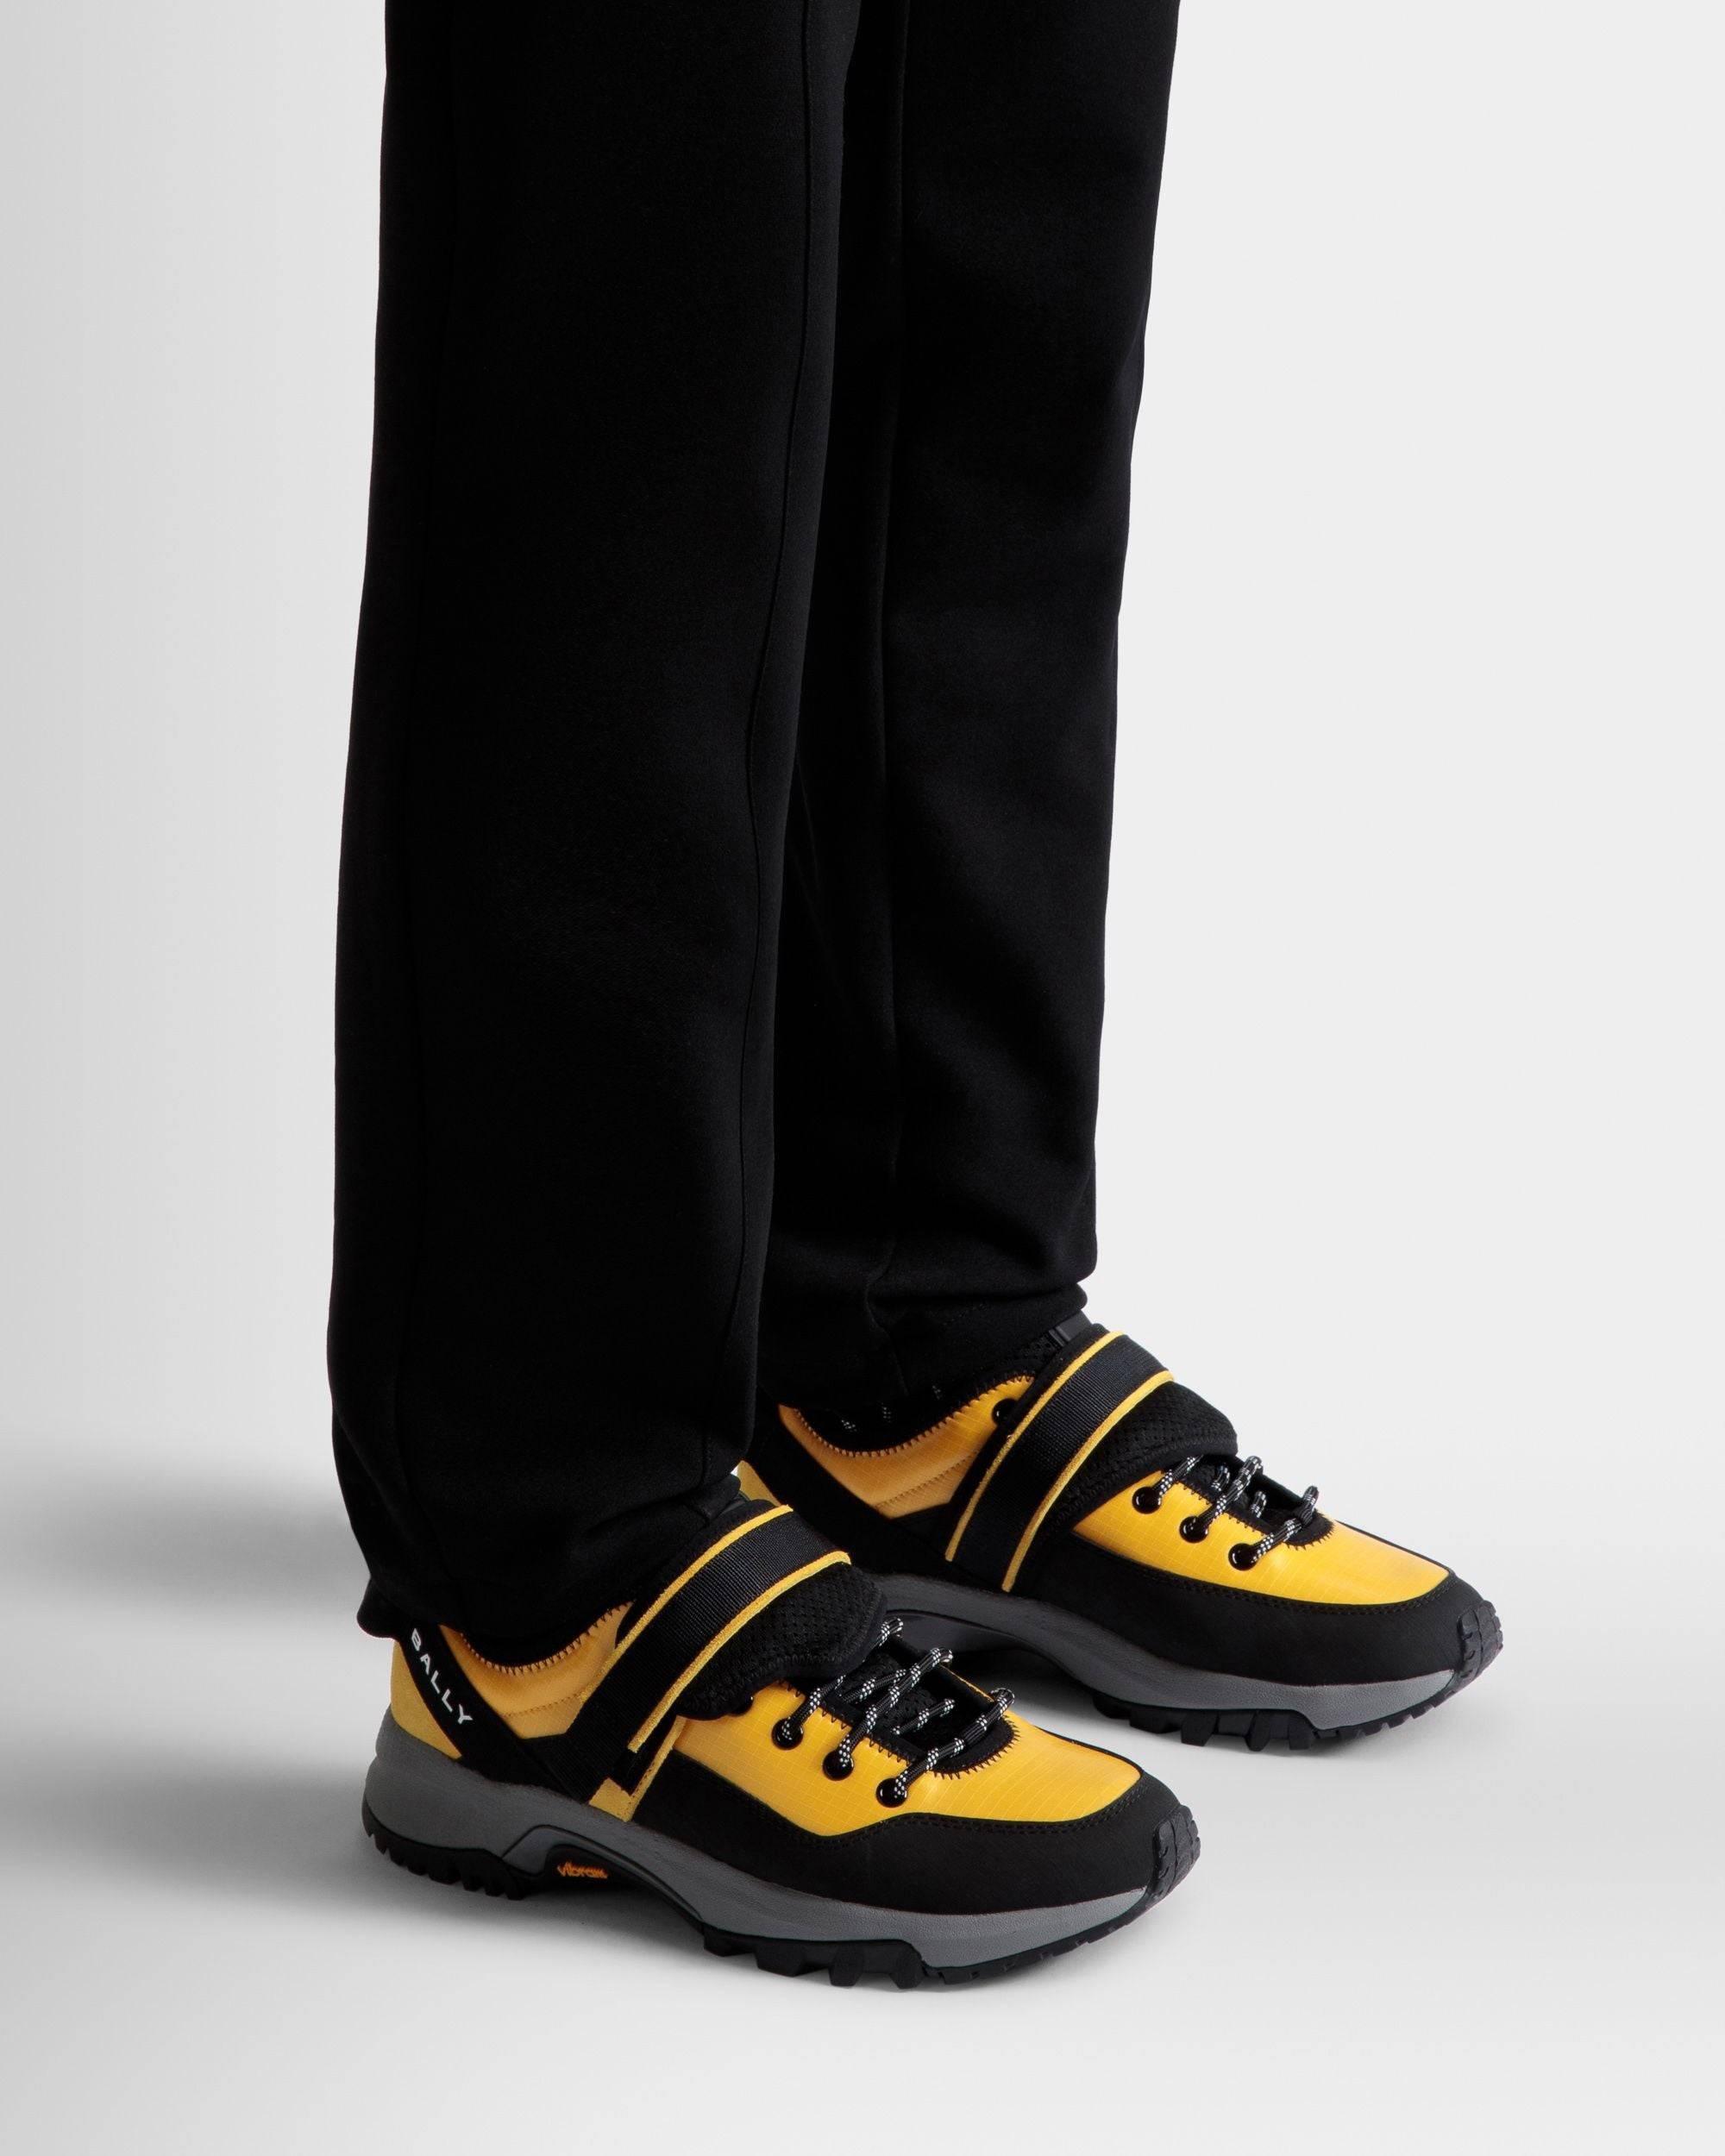 Faster | Herren-Sneaker aus gelbem Nylon | Bally | Model getragen Nahaufnahme